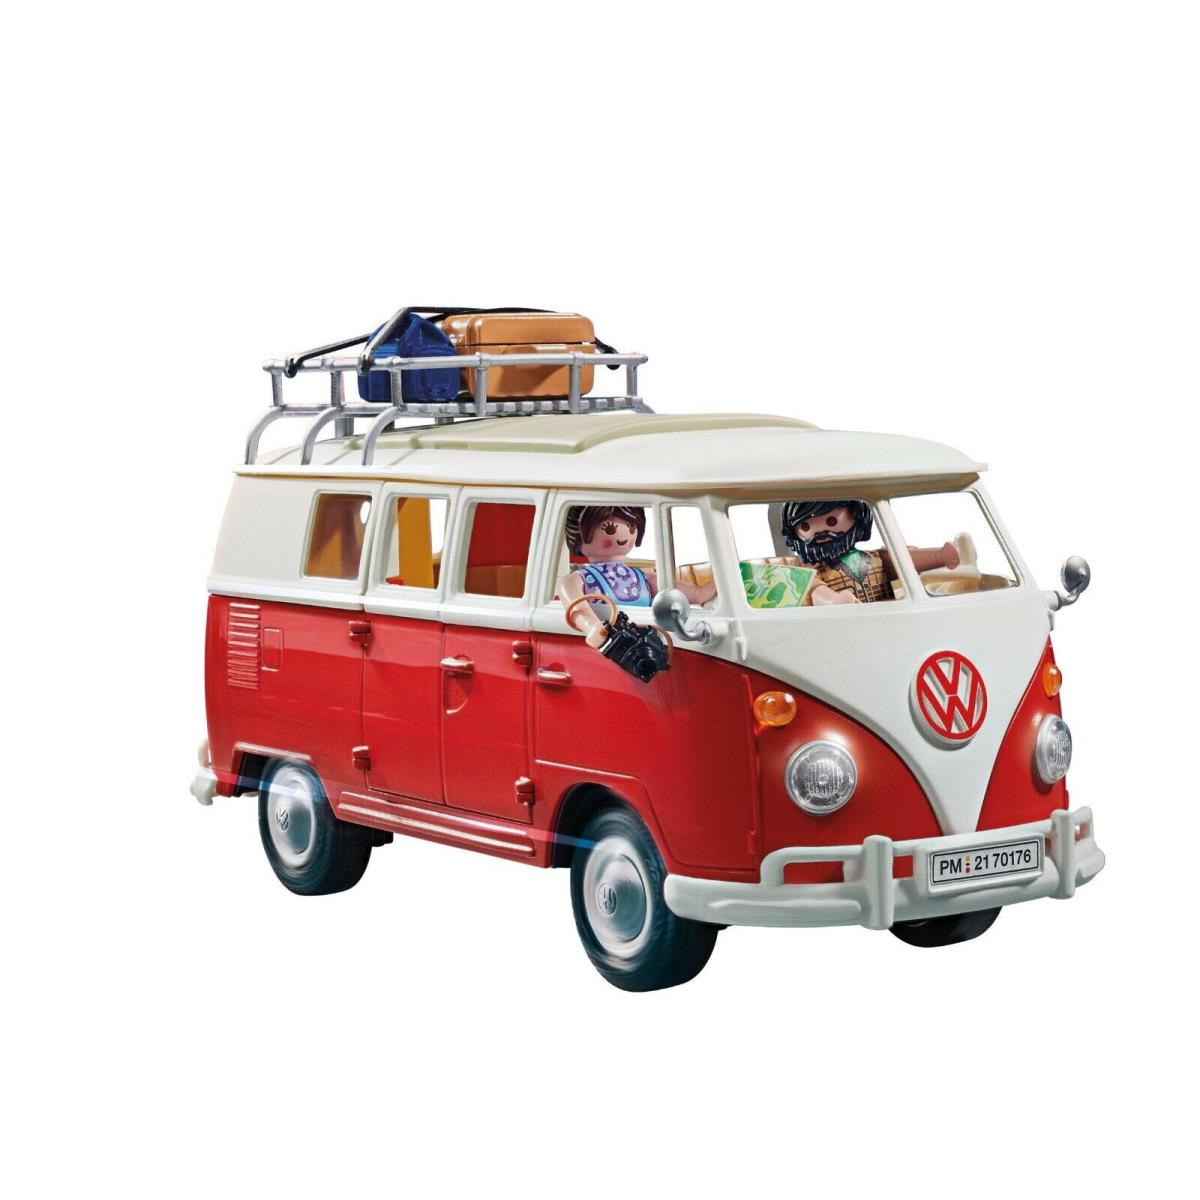 Playmobil 70176 VW Volkswagen T1 Camping Bus RV Motor Home Van